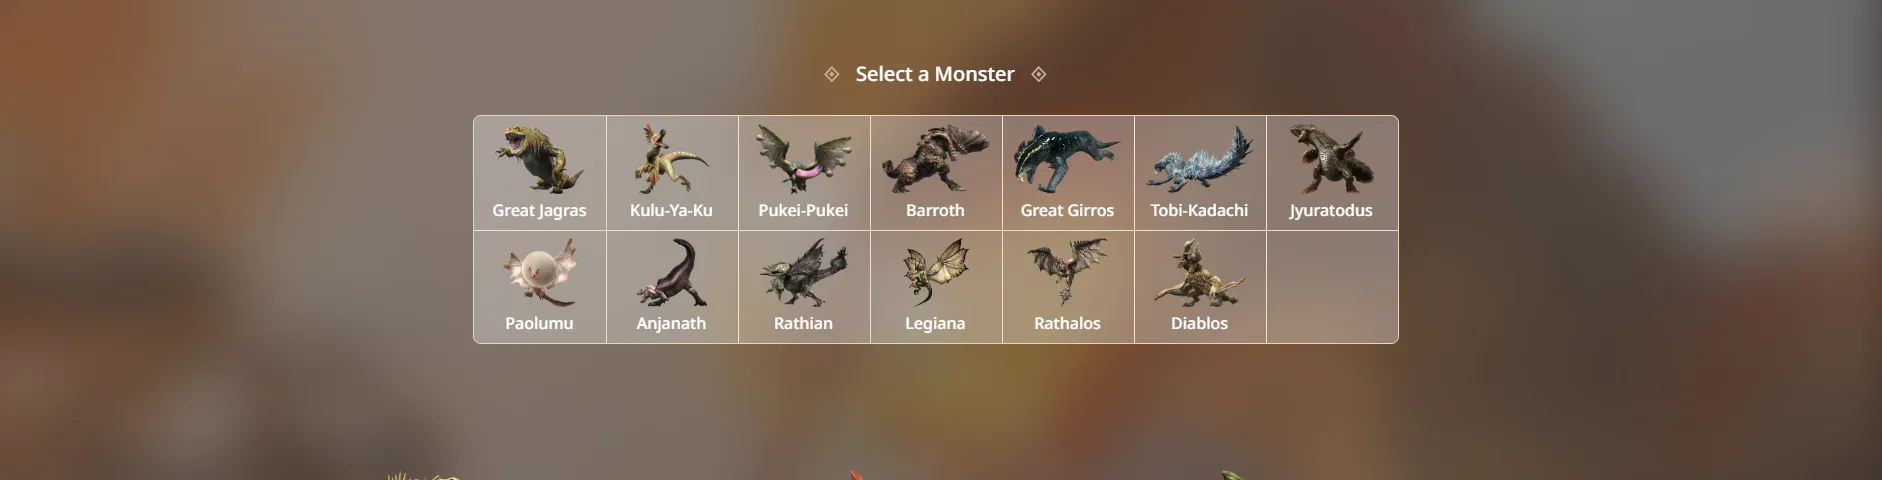 How to unlock new monsters in Monster Hunter Now's December update